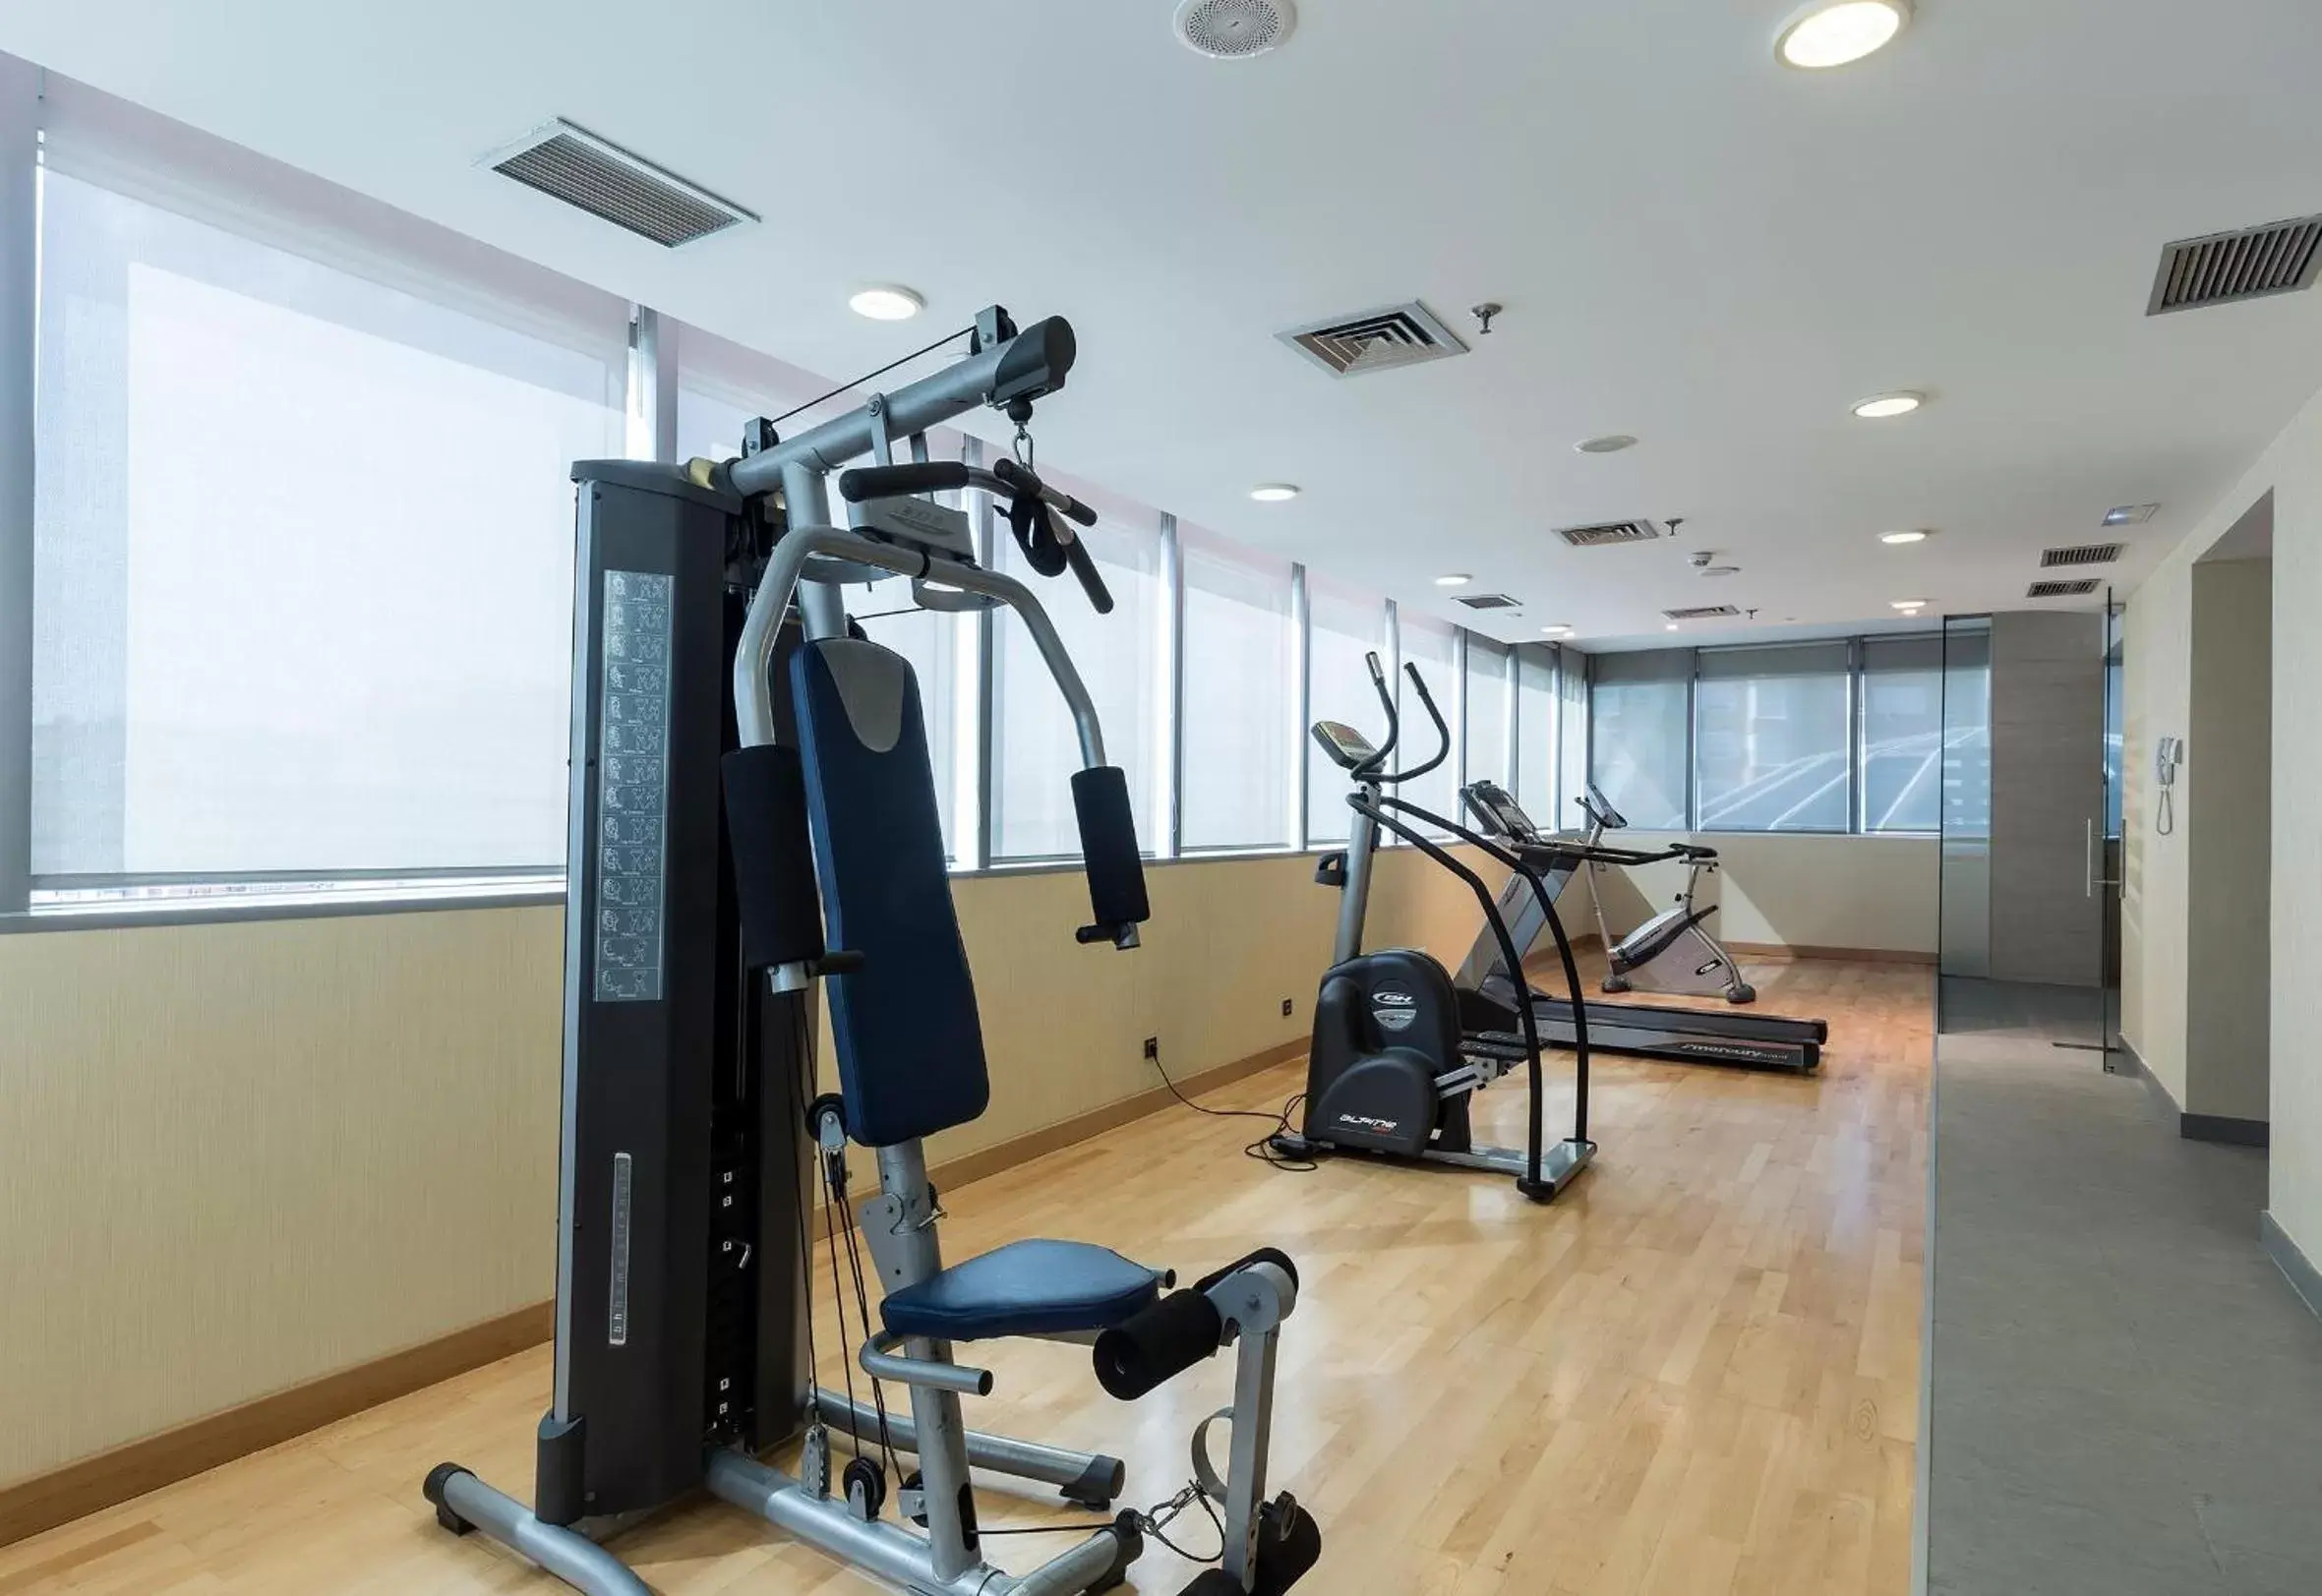 Fitness centre/facilities, Fitness Center/Facilities in LCB Hotel Fuenlabrada